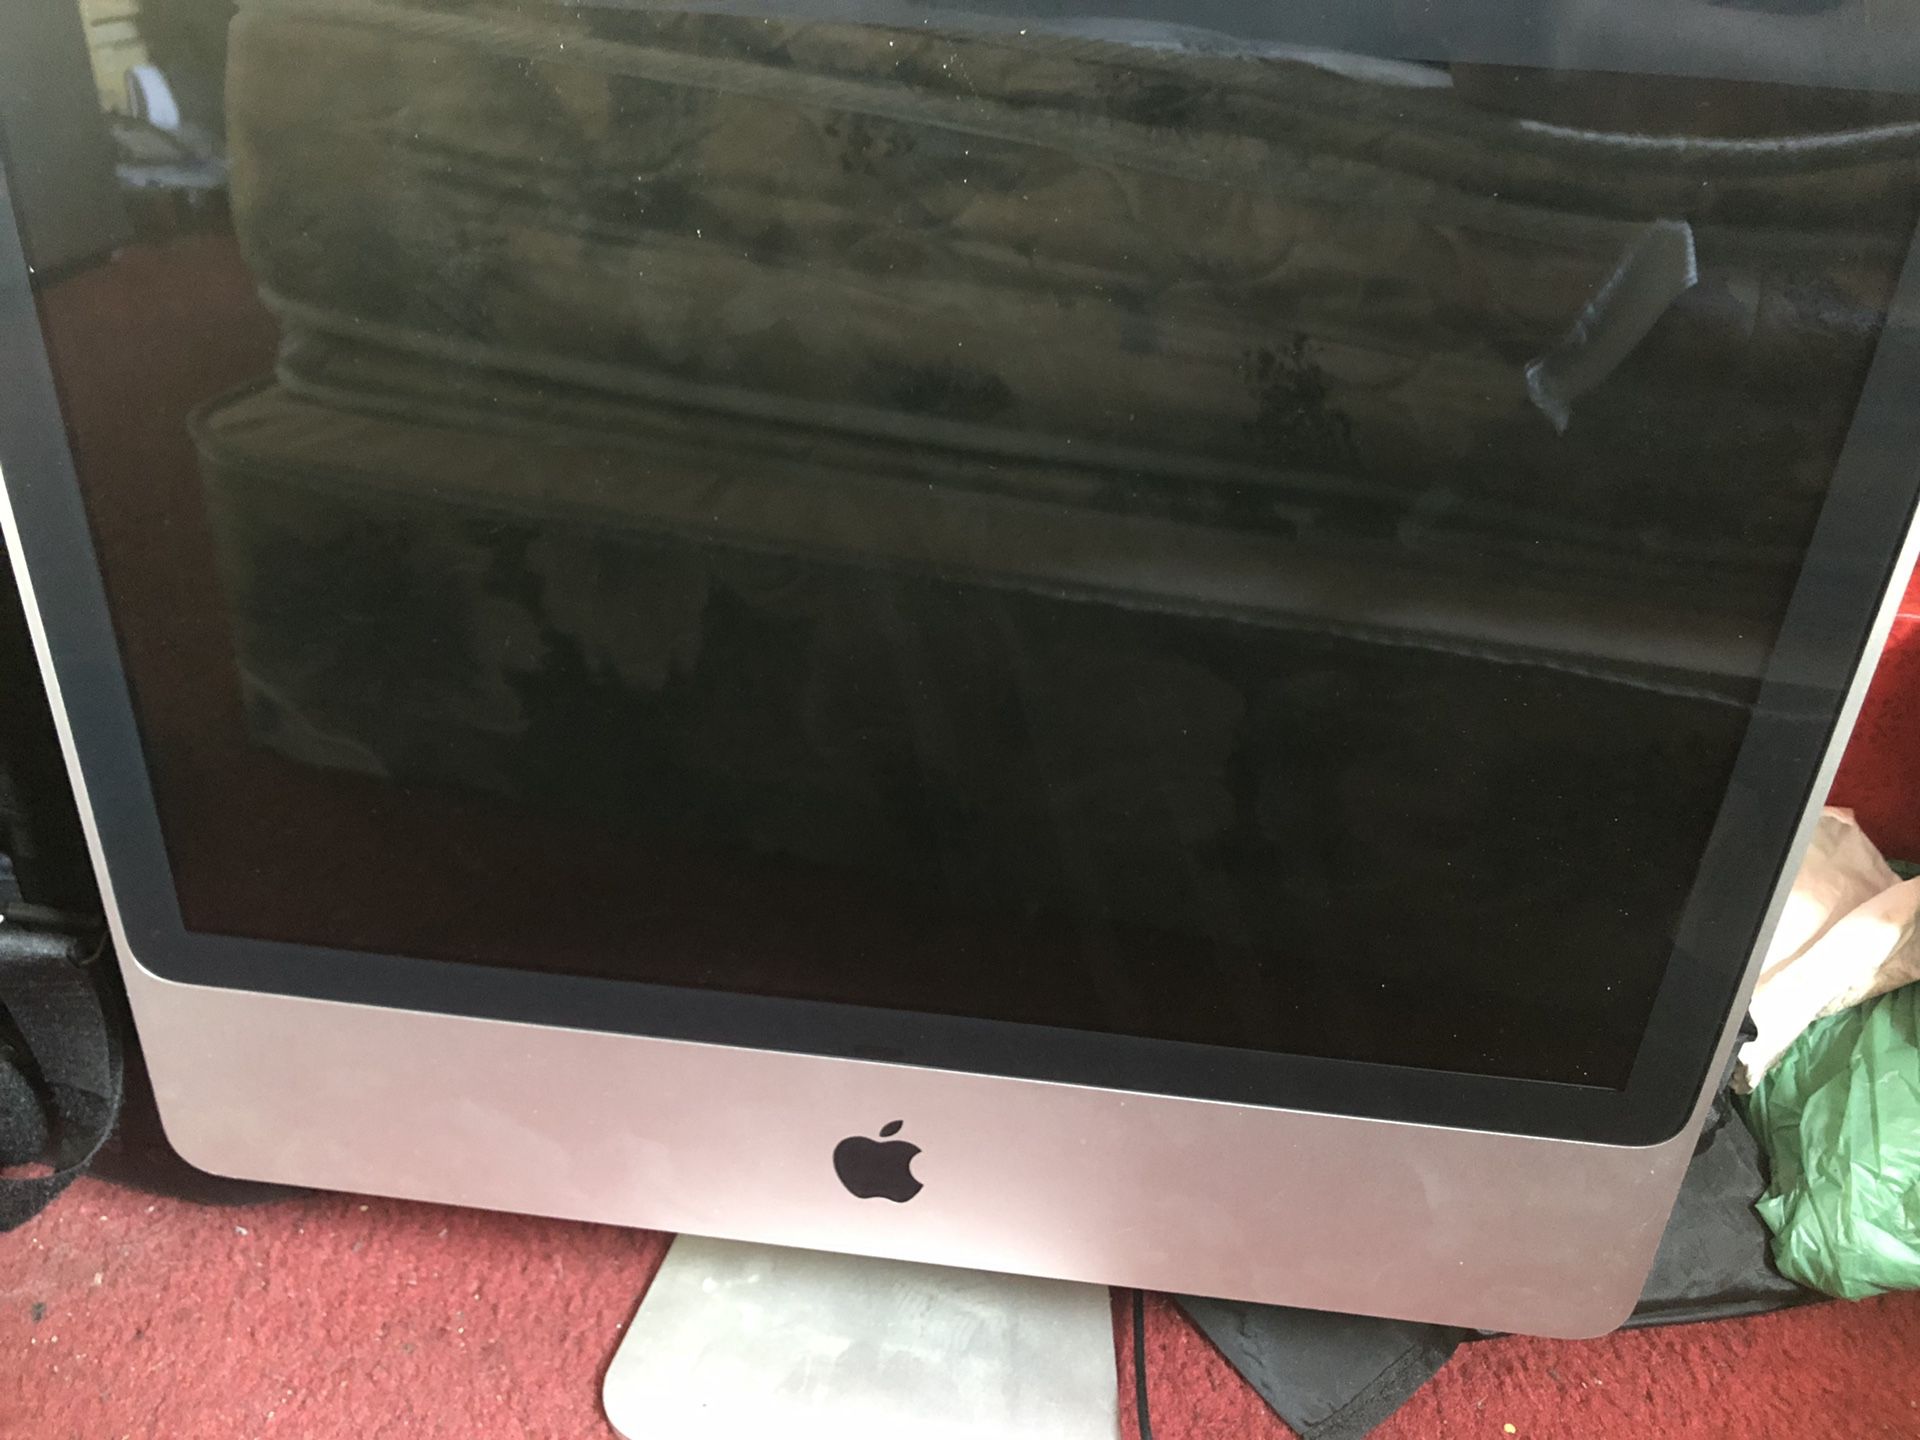 2009 iMac for sale